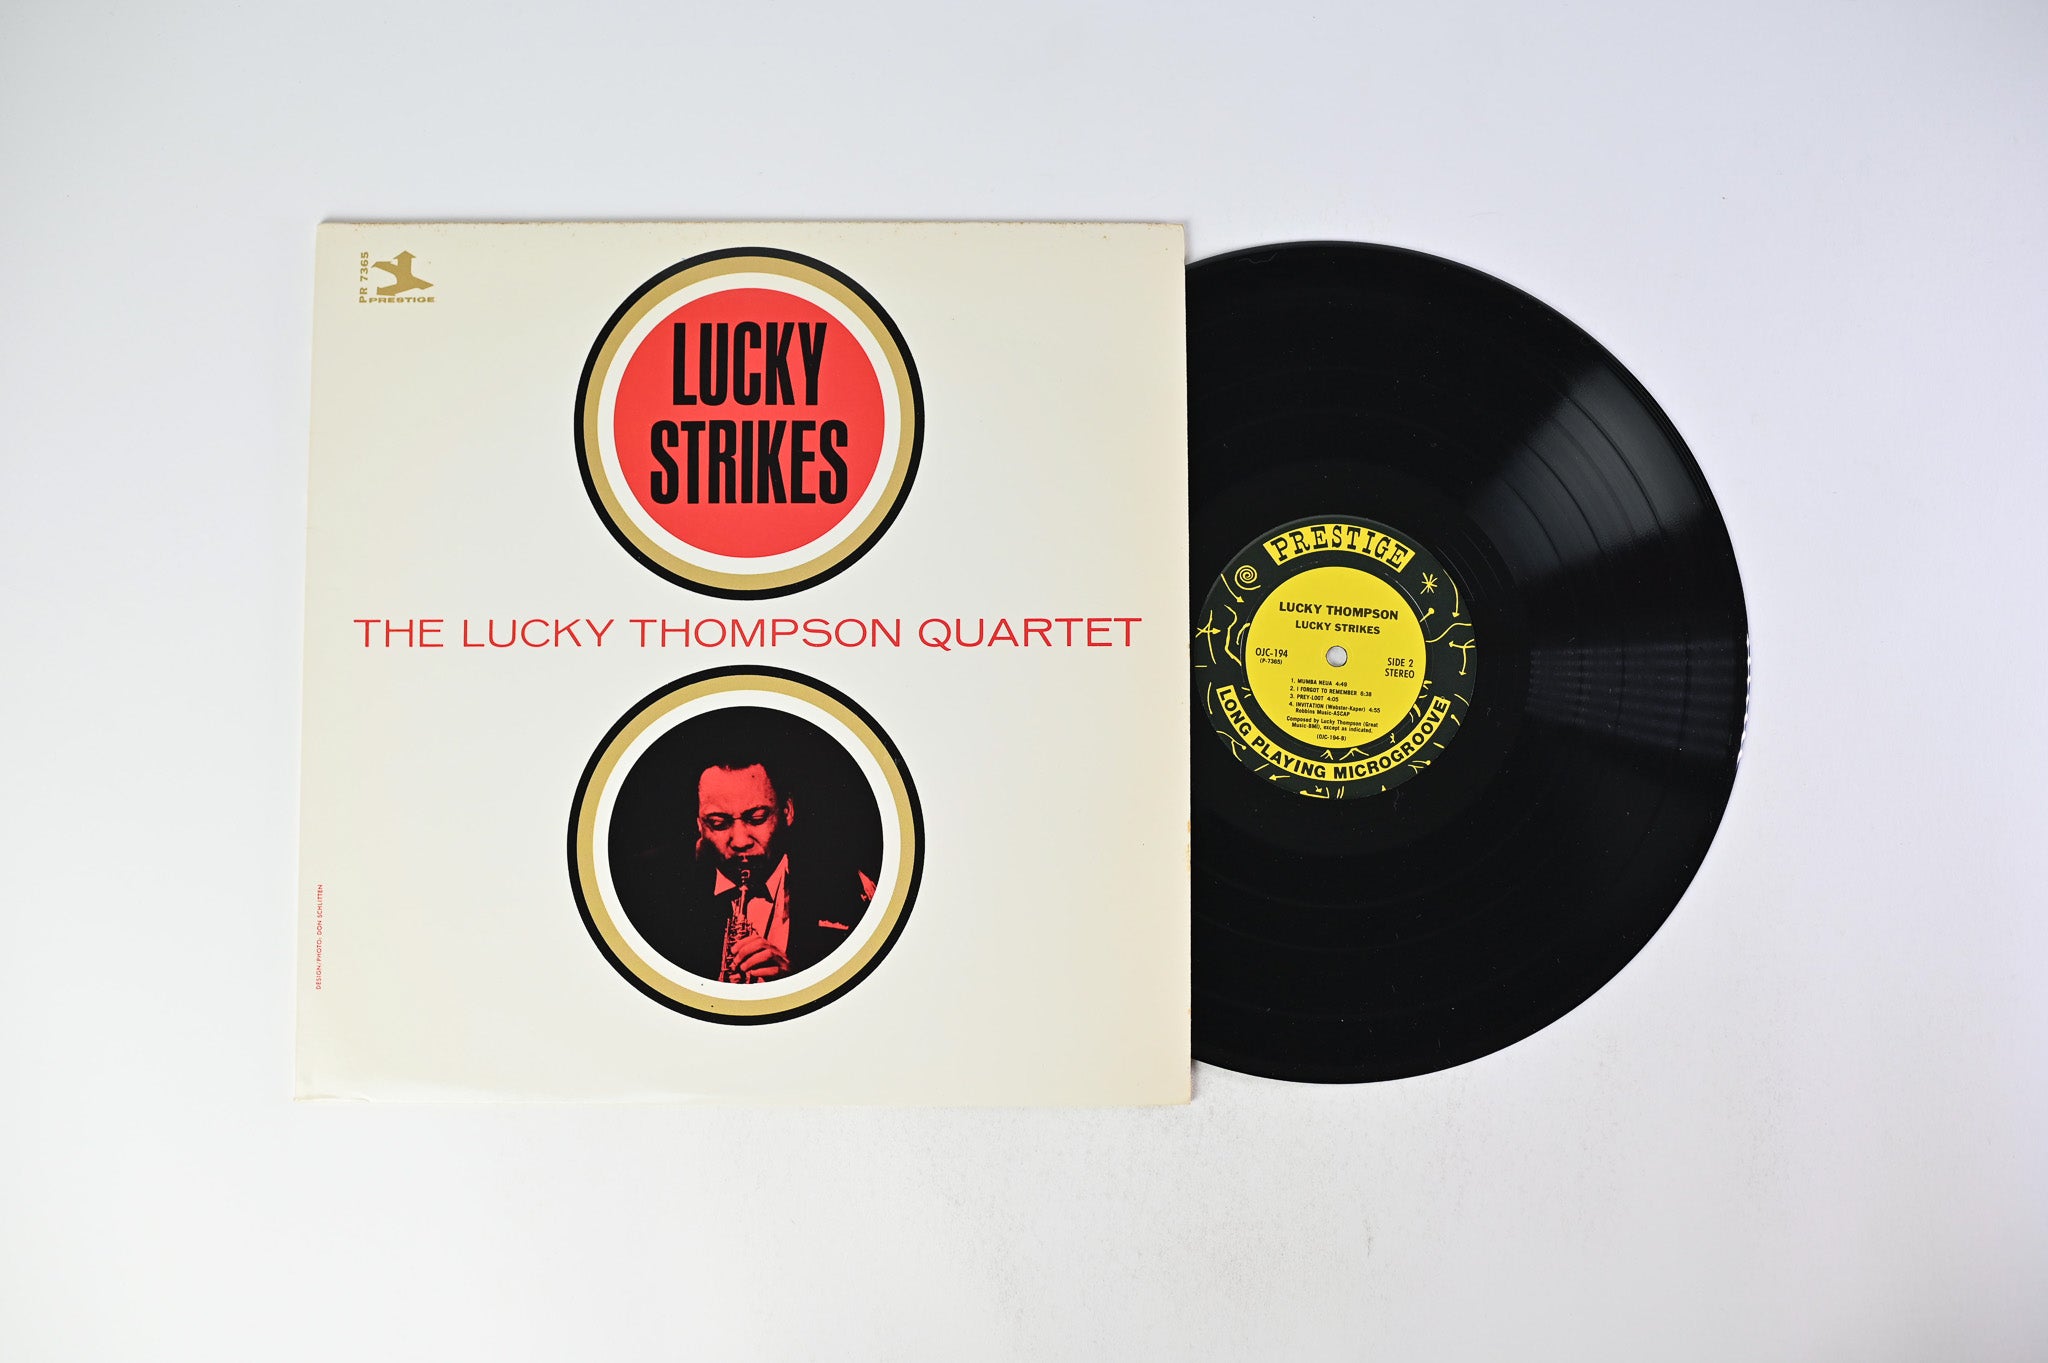 The Lucky Thompson Quartet - Lucky Strikes Reissue on Original Jazz Classics